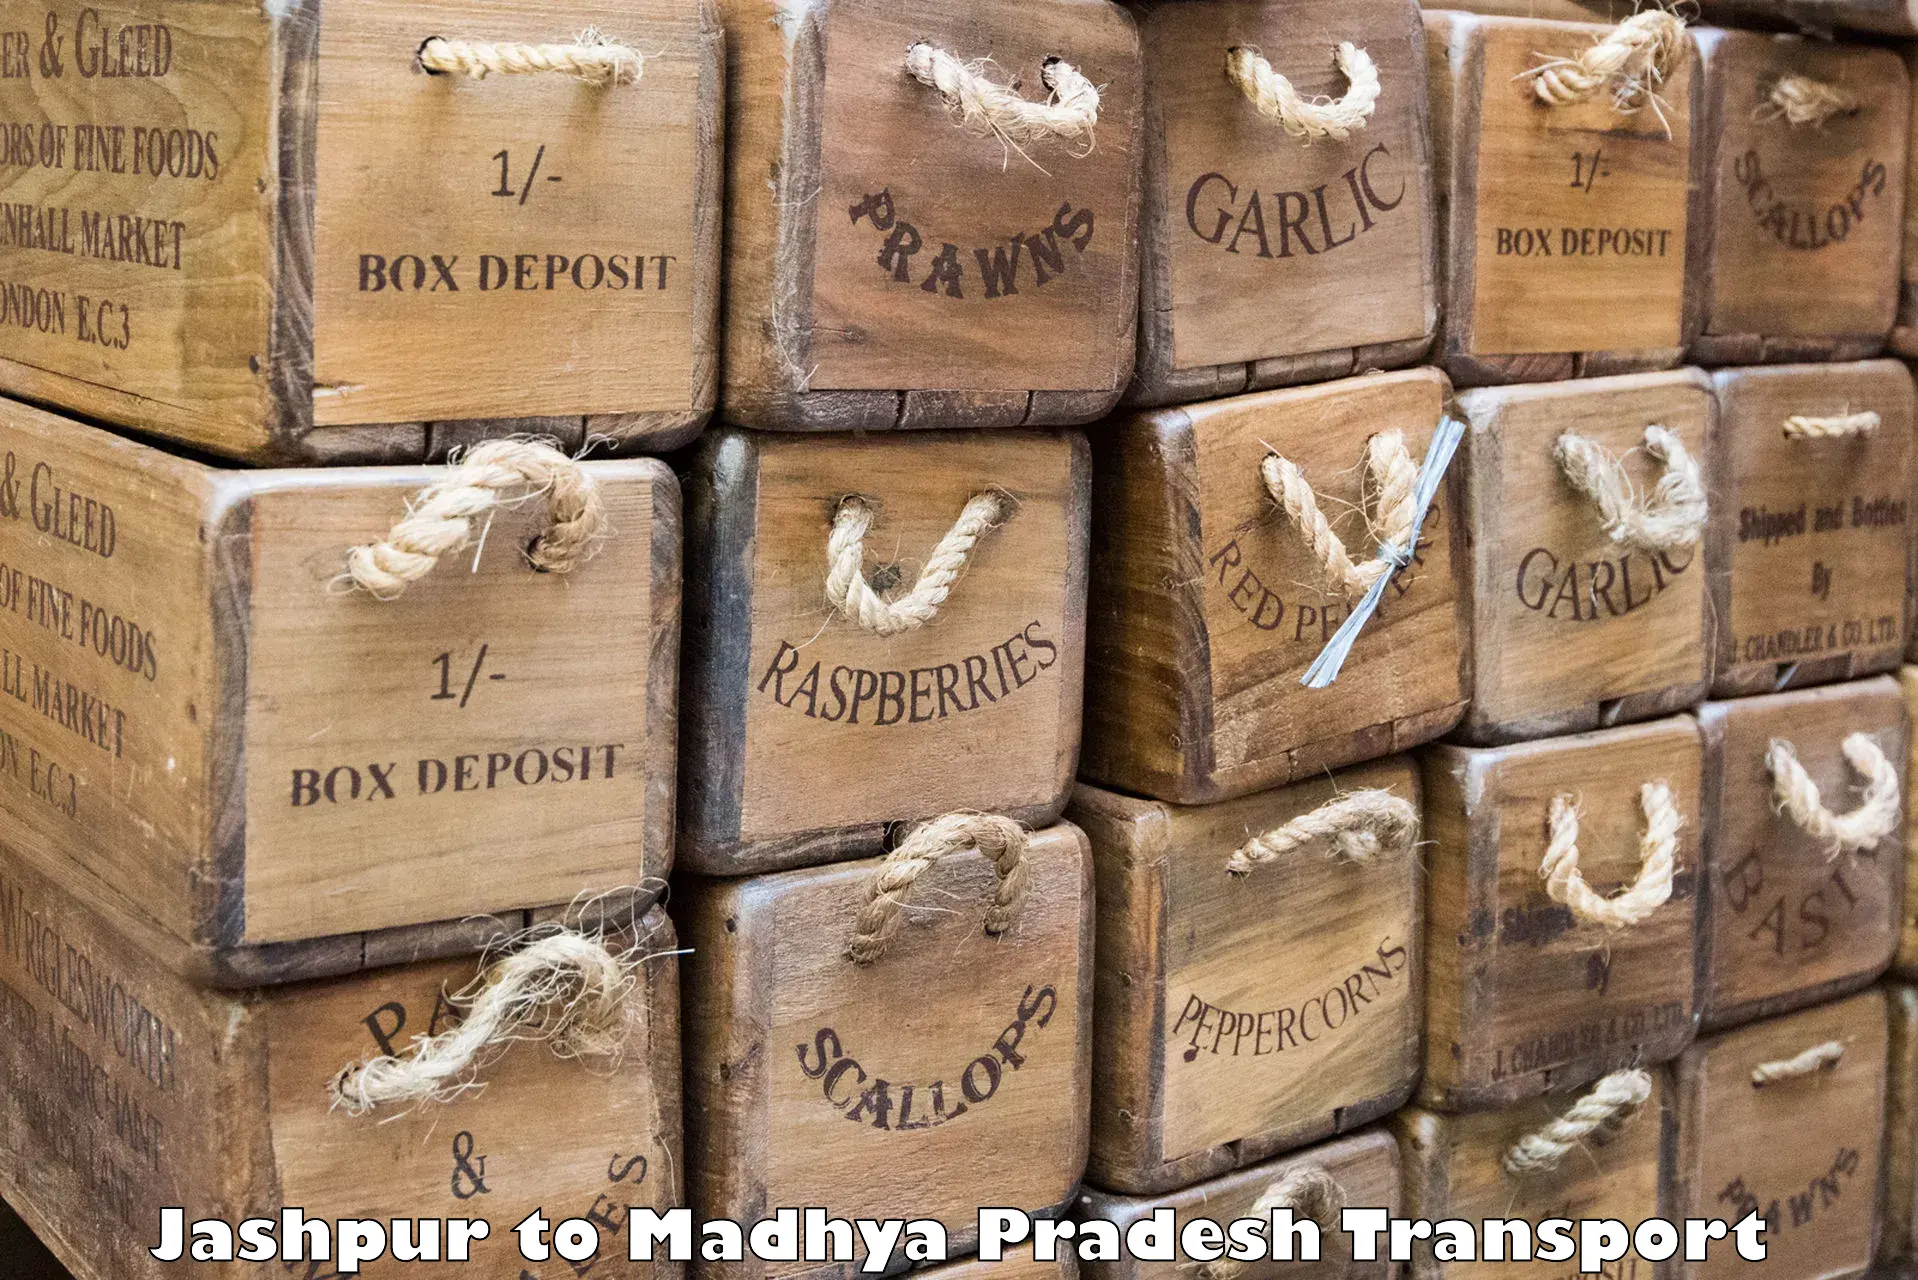 Air freight transport services Jashpur to Ghatiya